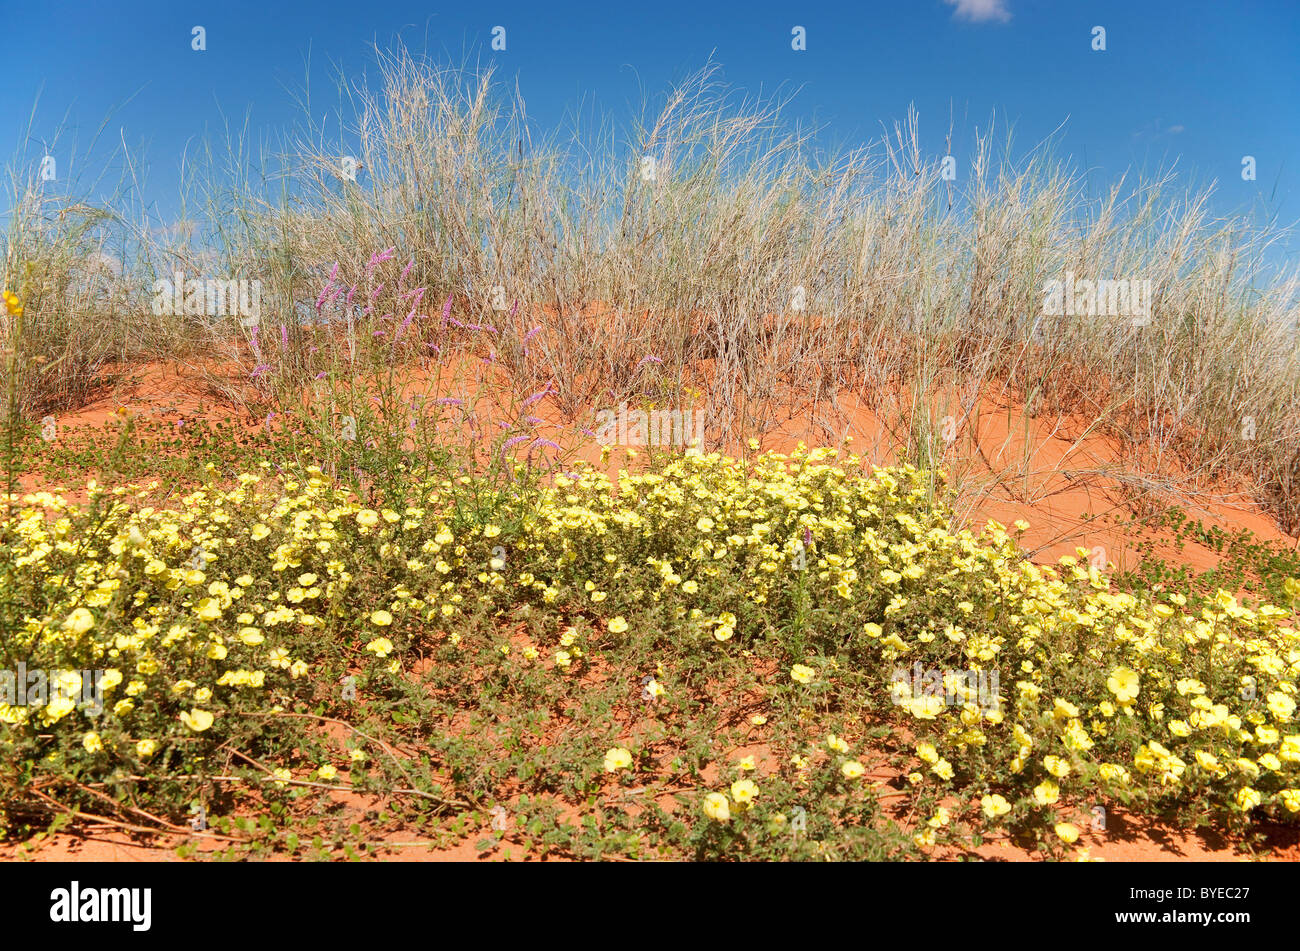 Annual Devils Thorn (Tribulus terrestris) flowering on a sand dune in March during the rainy season. Kalahari Desert Stock Photo